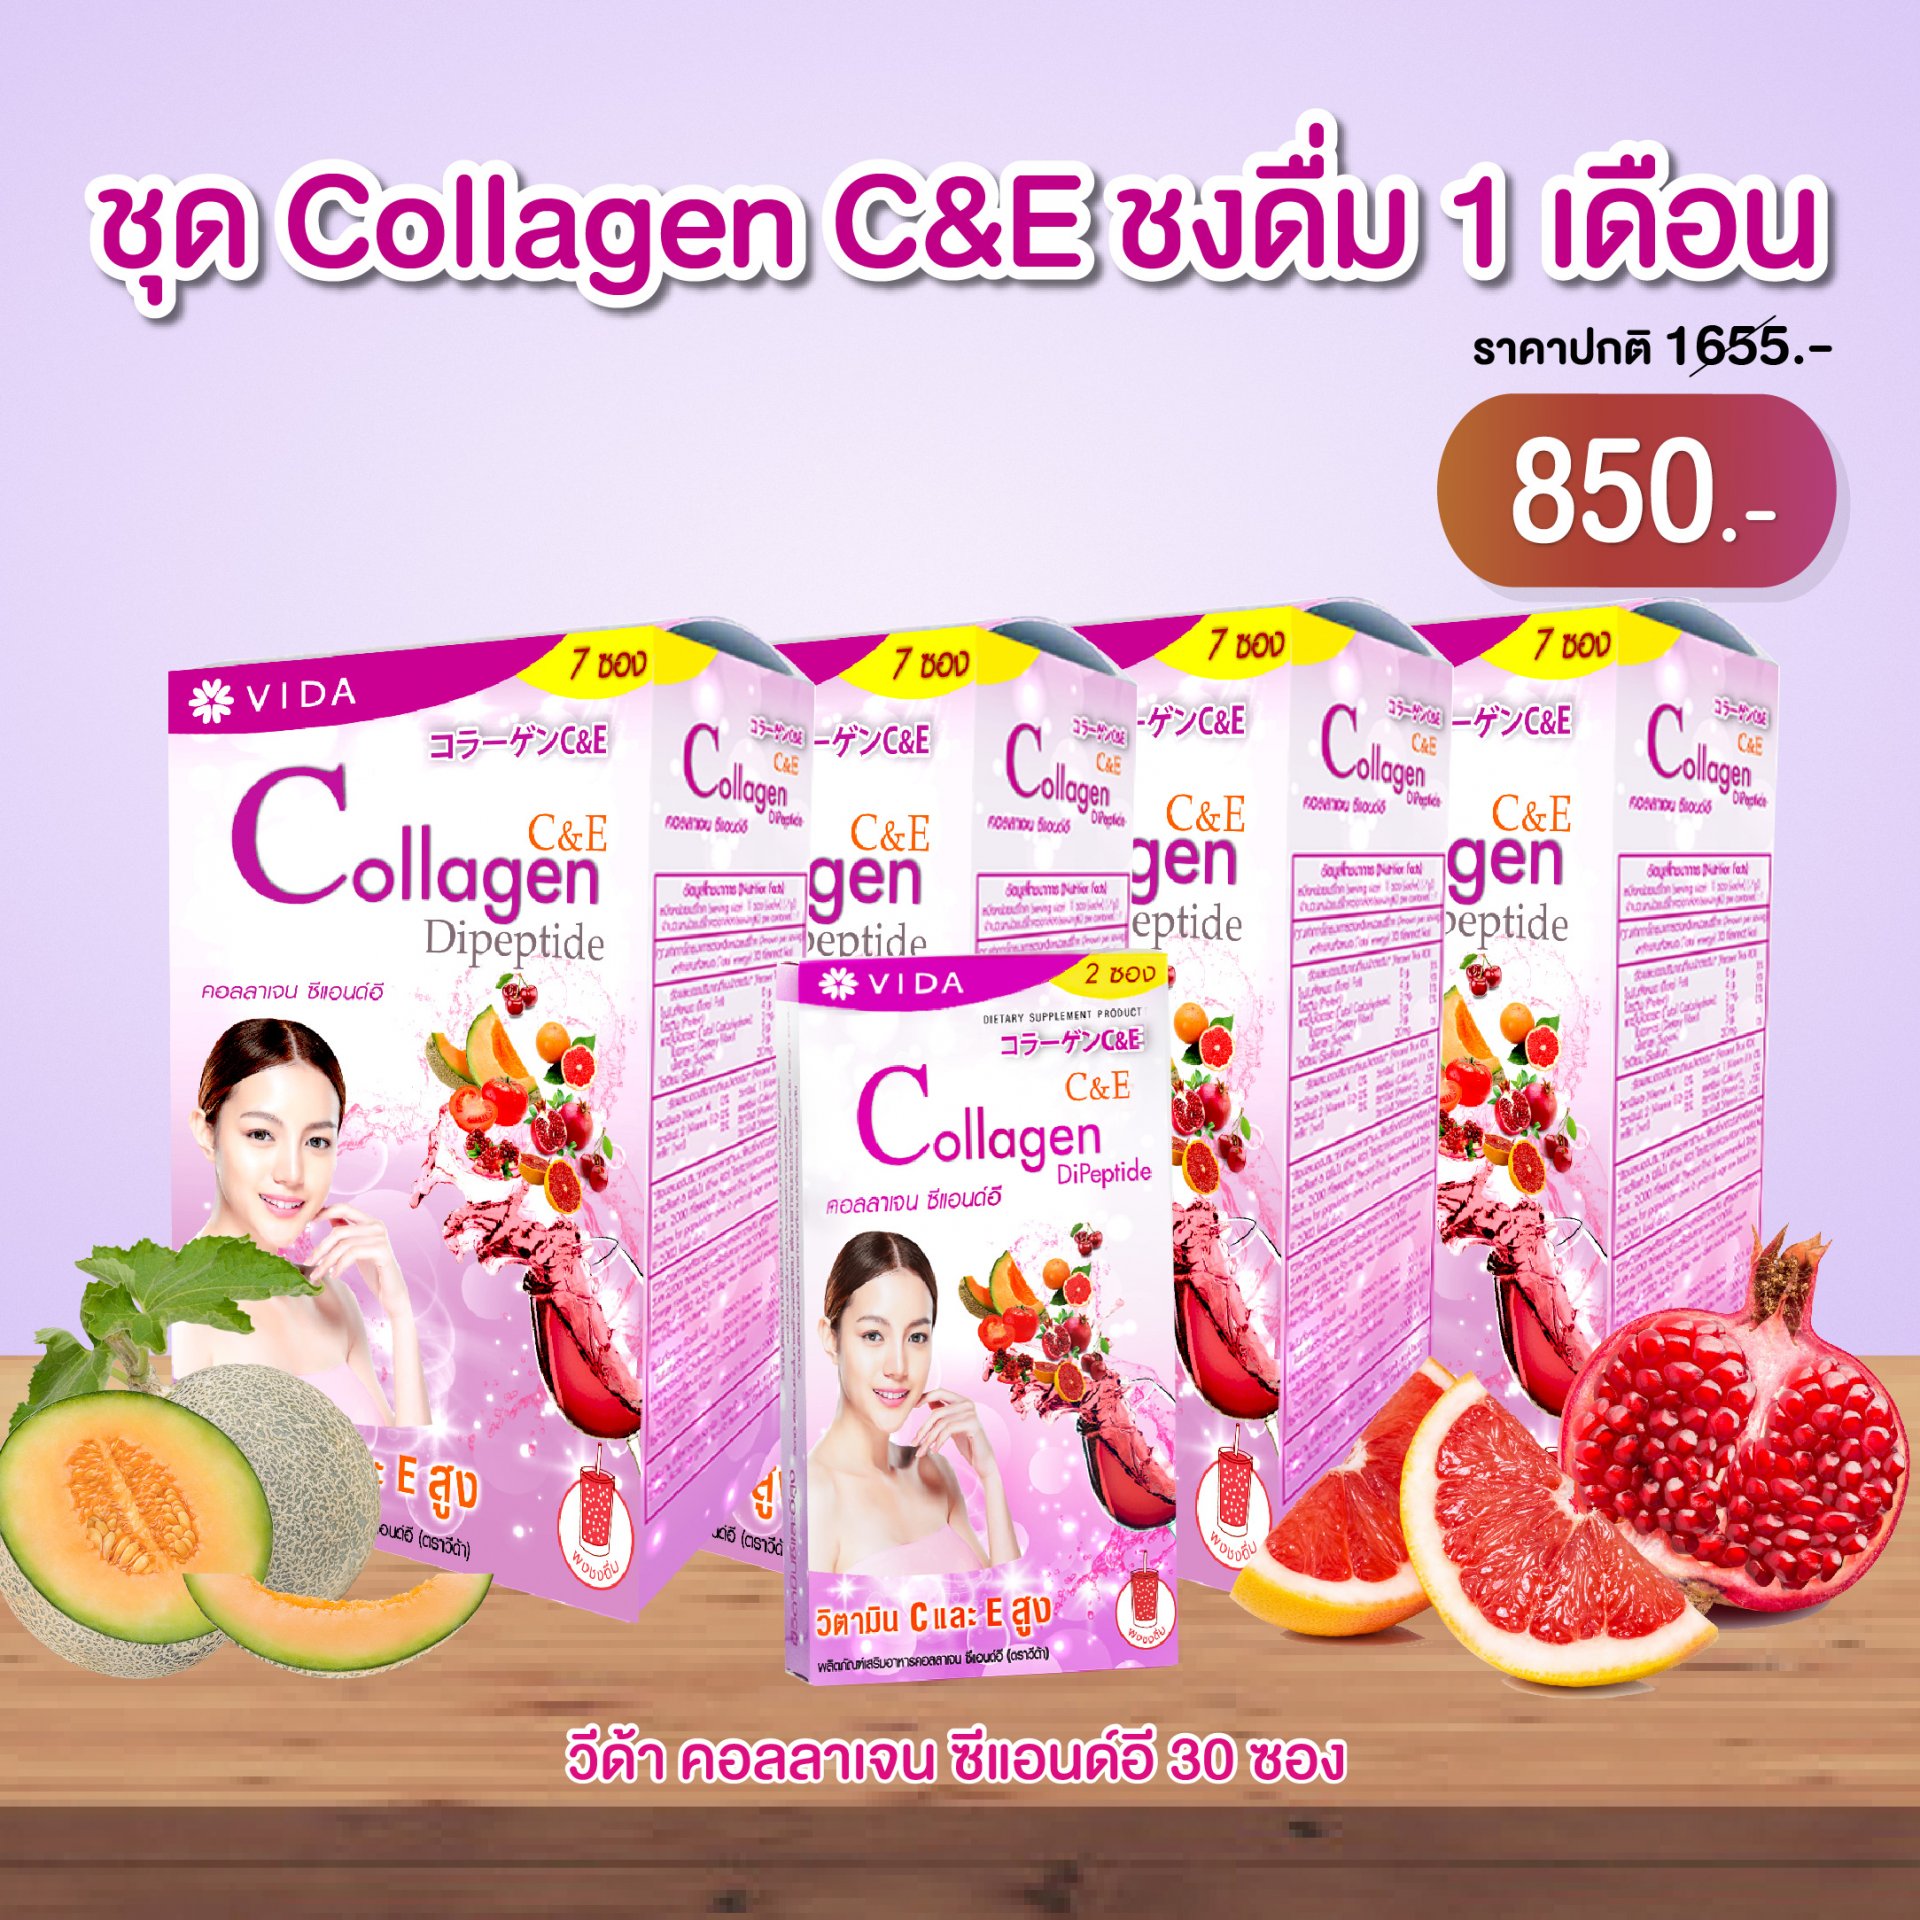 Vida Collagen C&E 1 month 30 pack